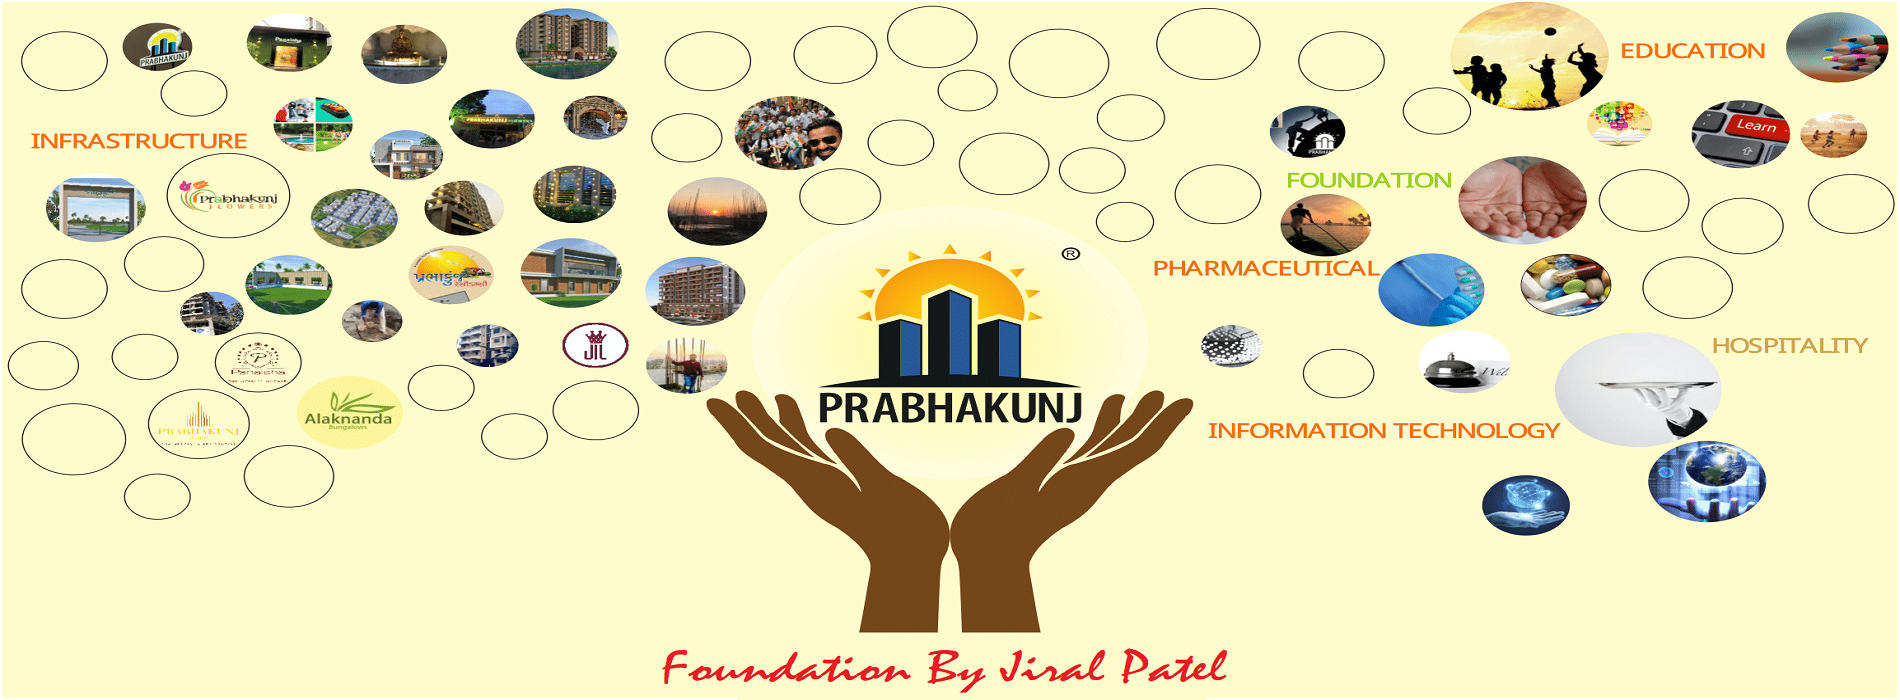 prabhakunj Foundation Main Image